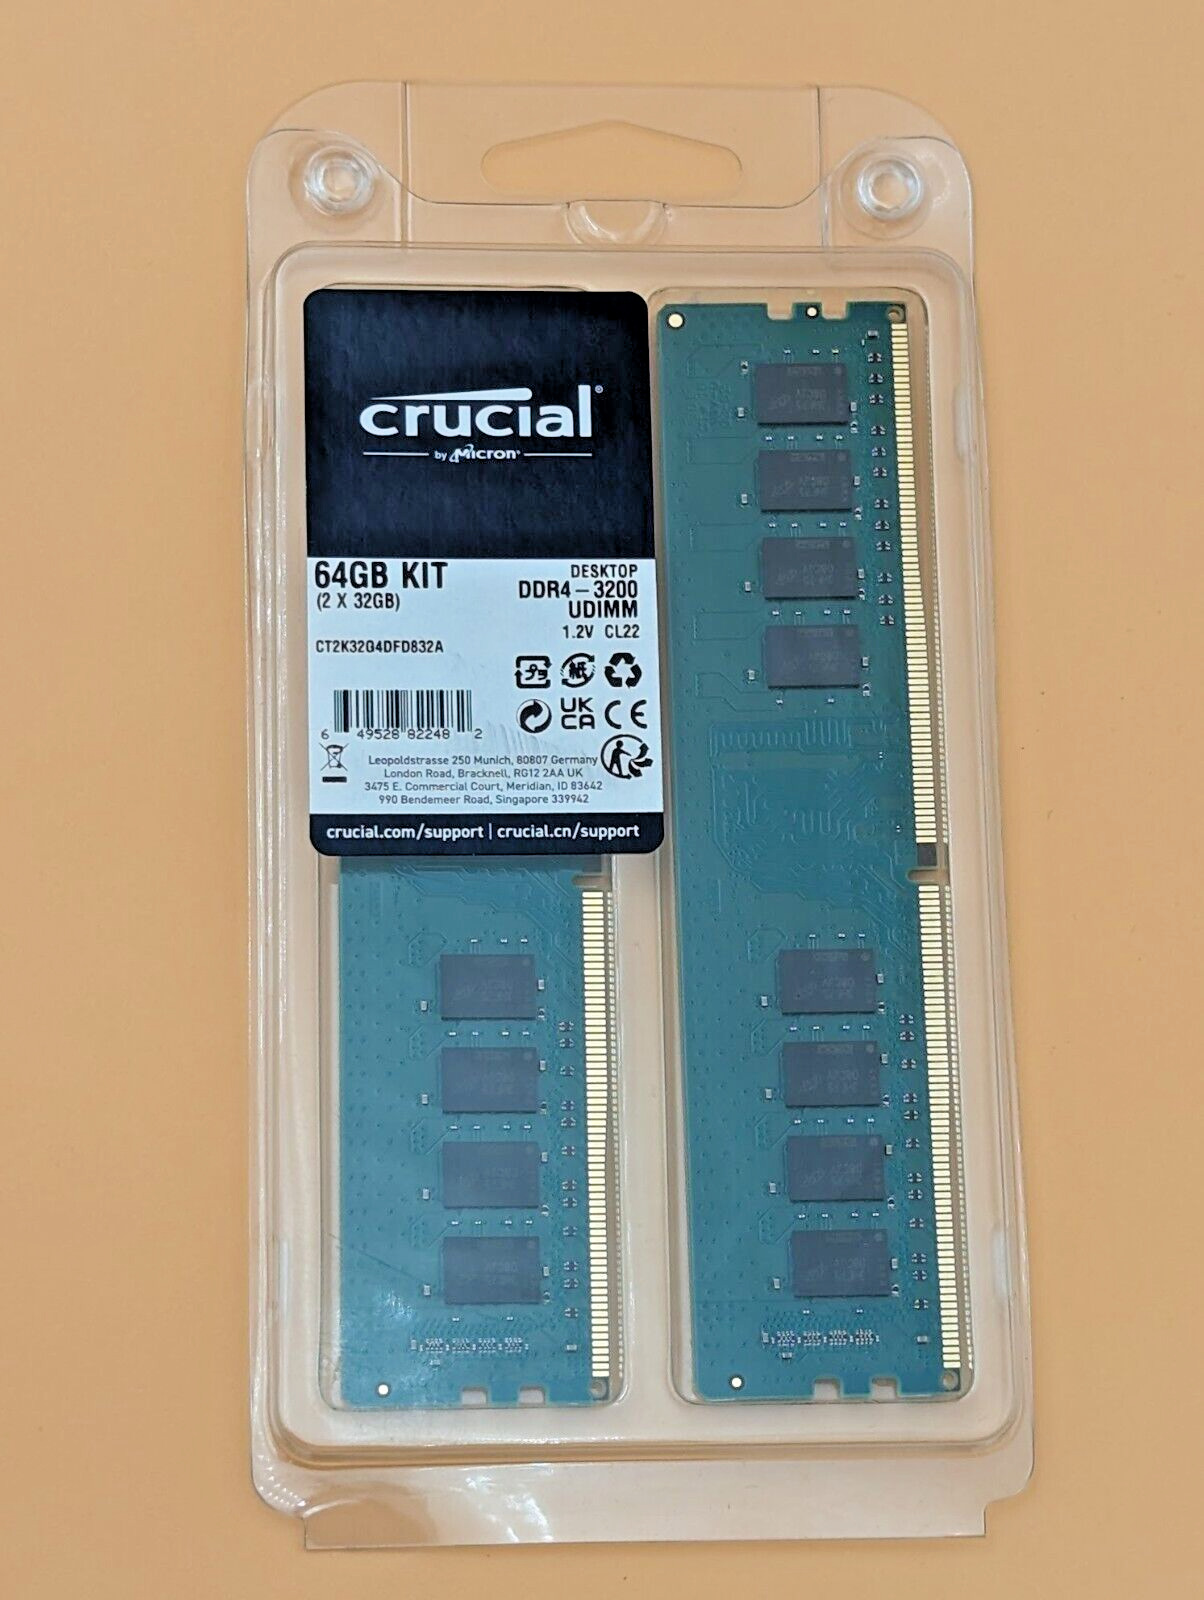 NEW Crucial 64GB Kit (2x 32GB) DDR4-3200 Desktop UDIMM 1.2V CL22 CT2K16G4DFRA32A